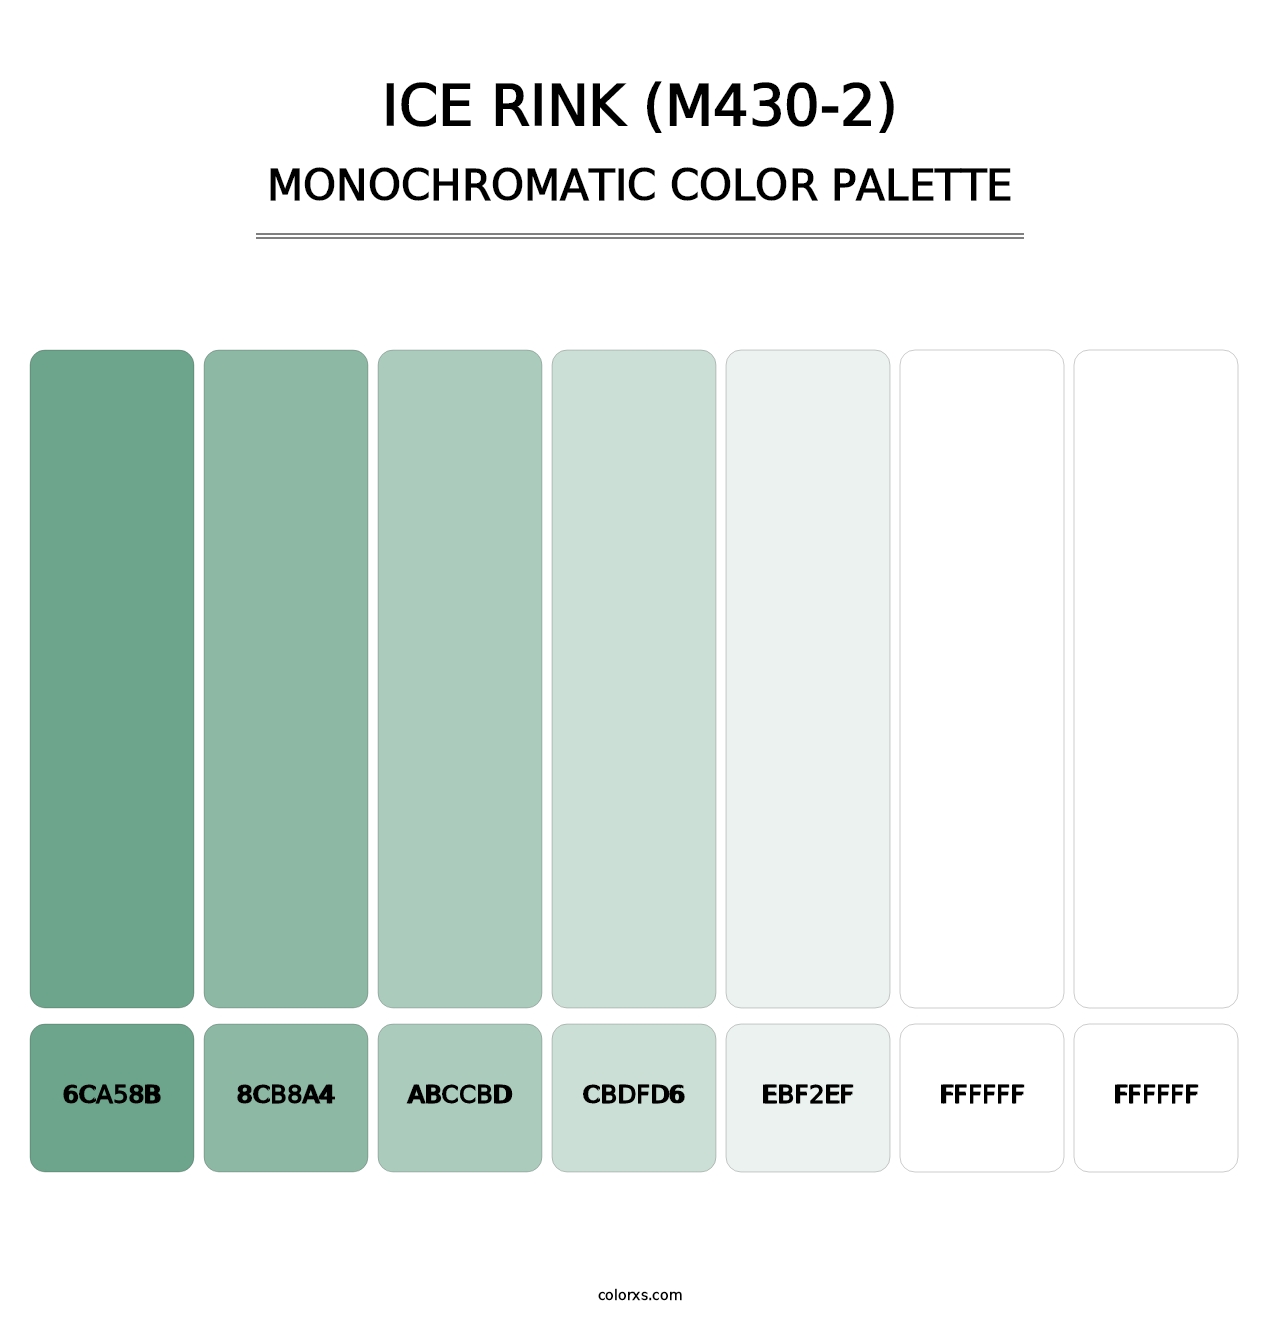 Ice Rink (M430-2) - Monochromatic Color Palette